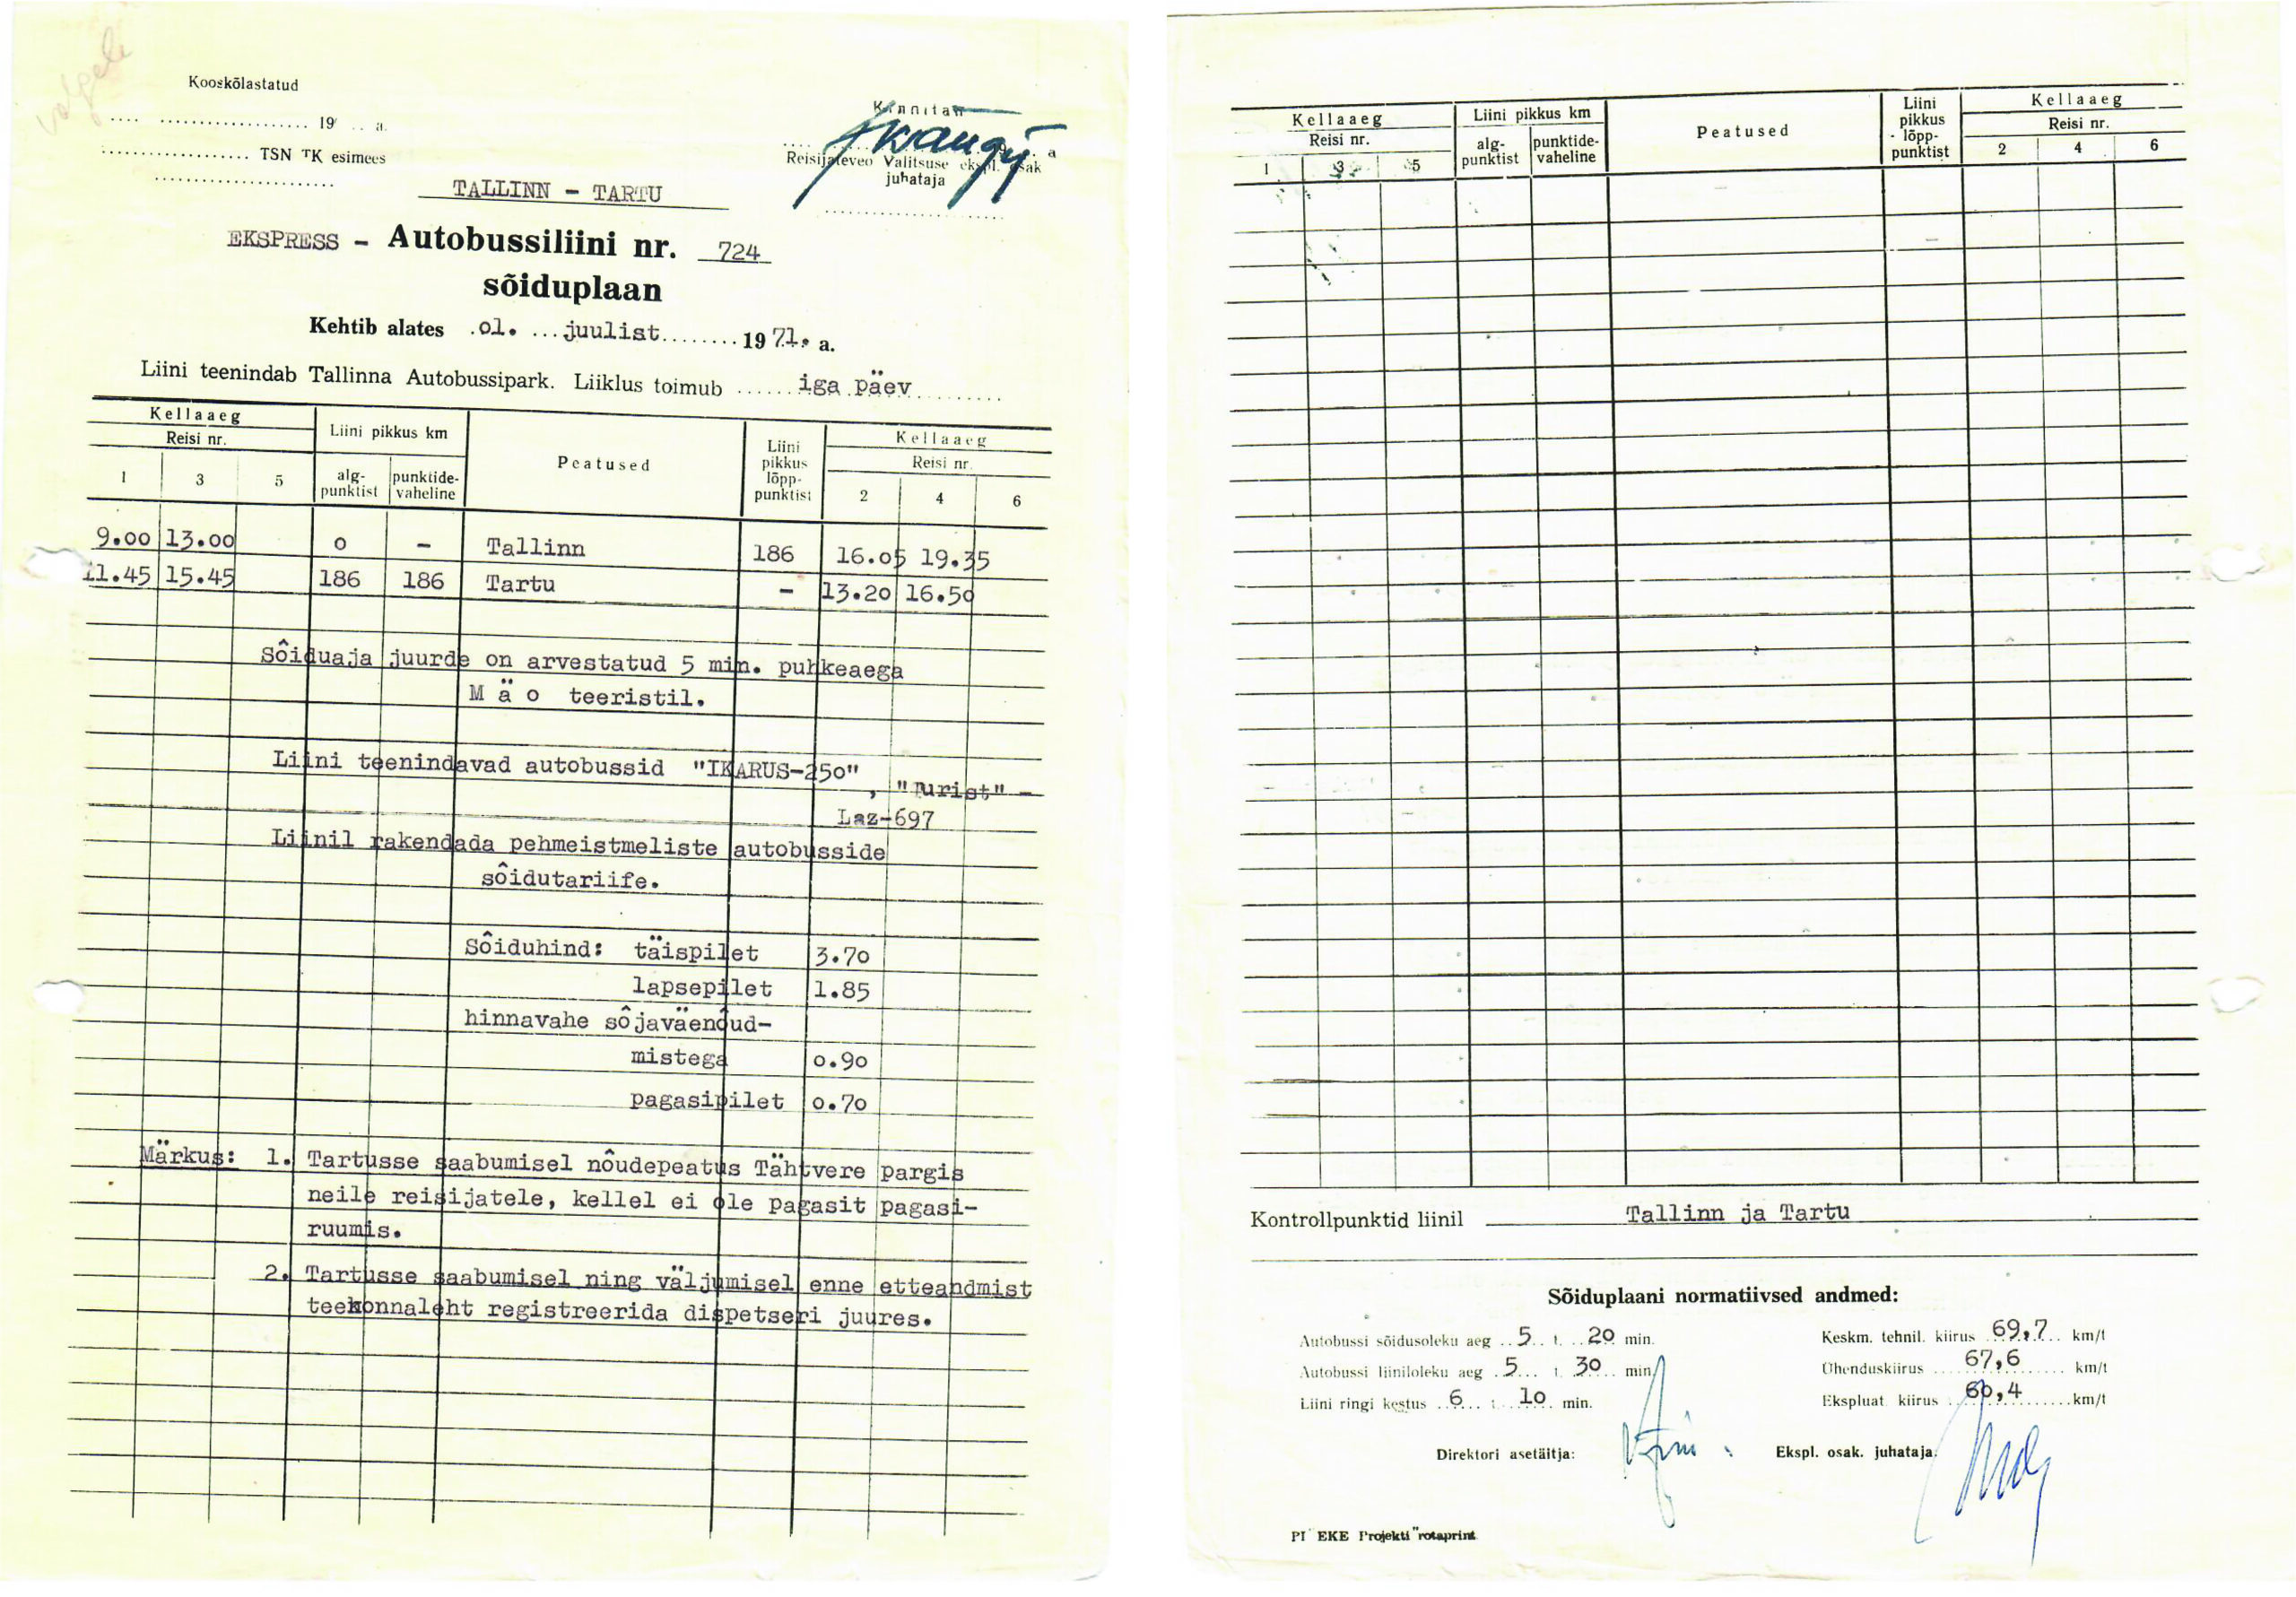 1971 Timetable